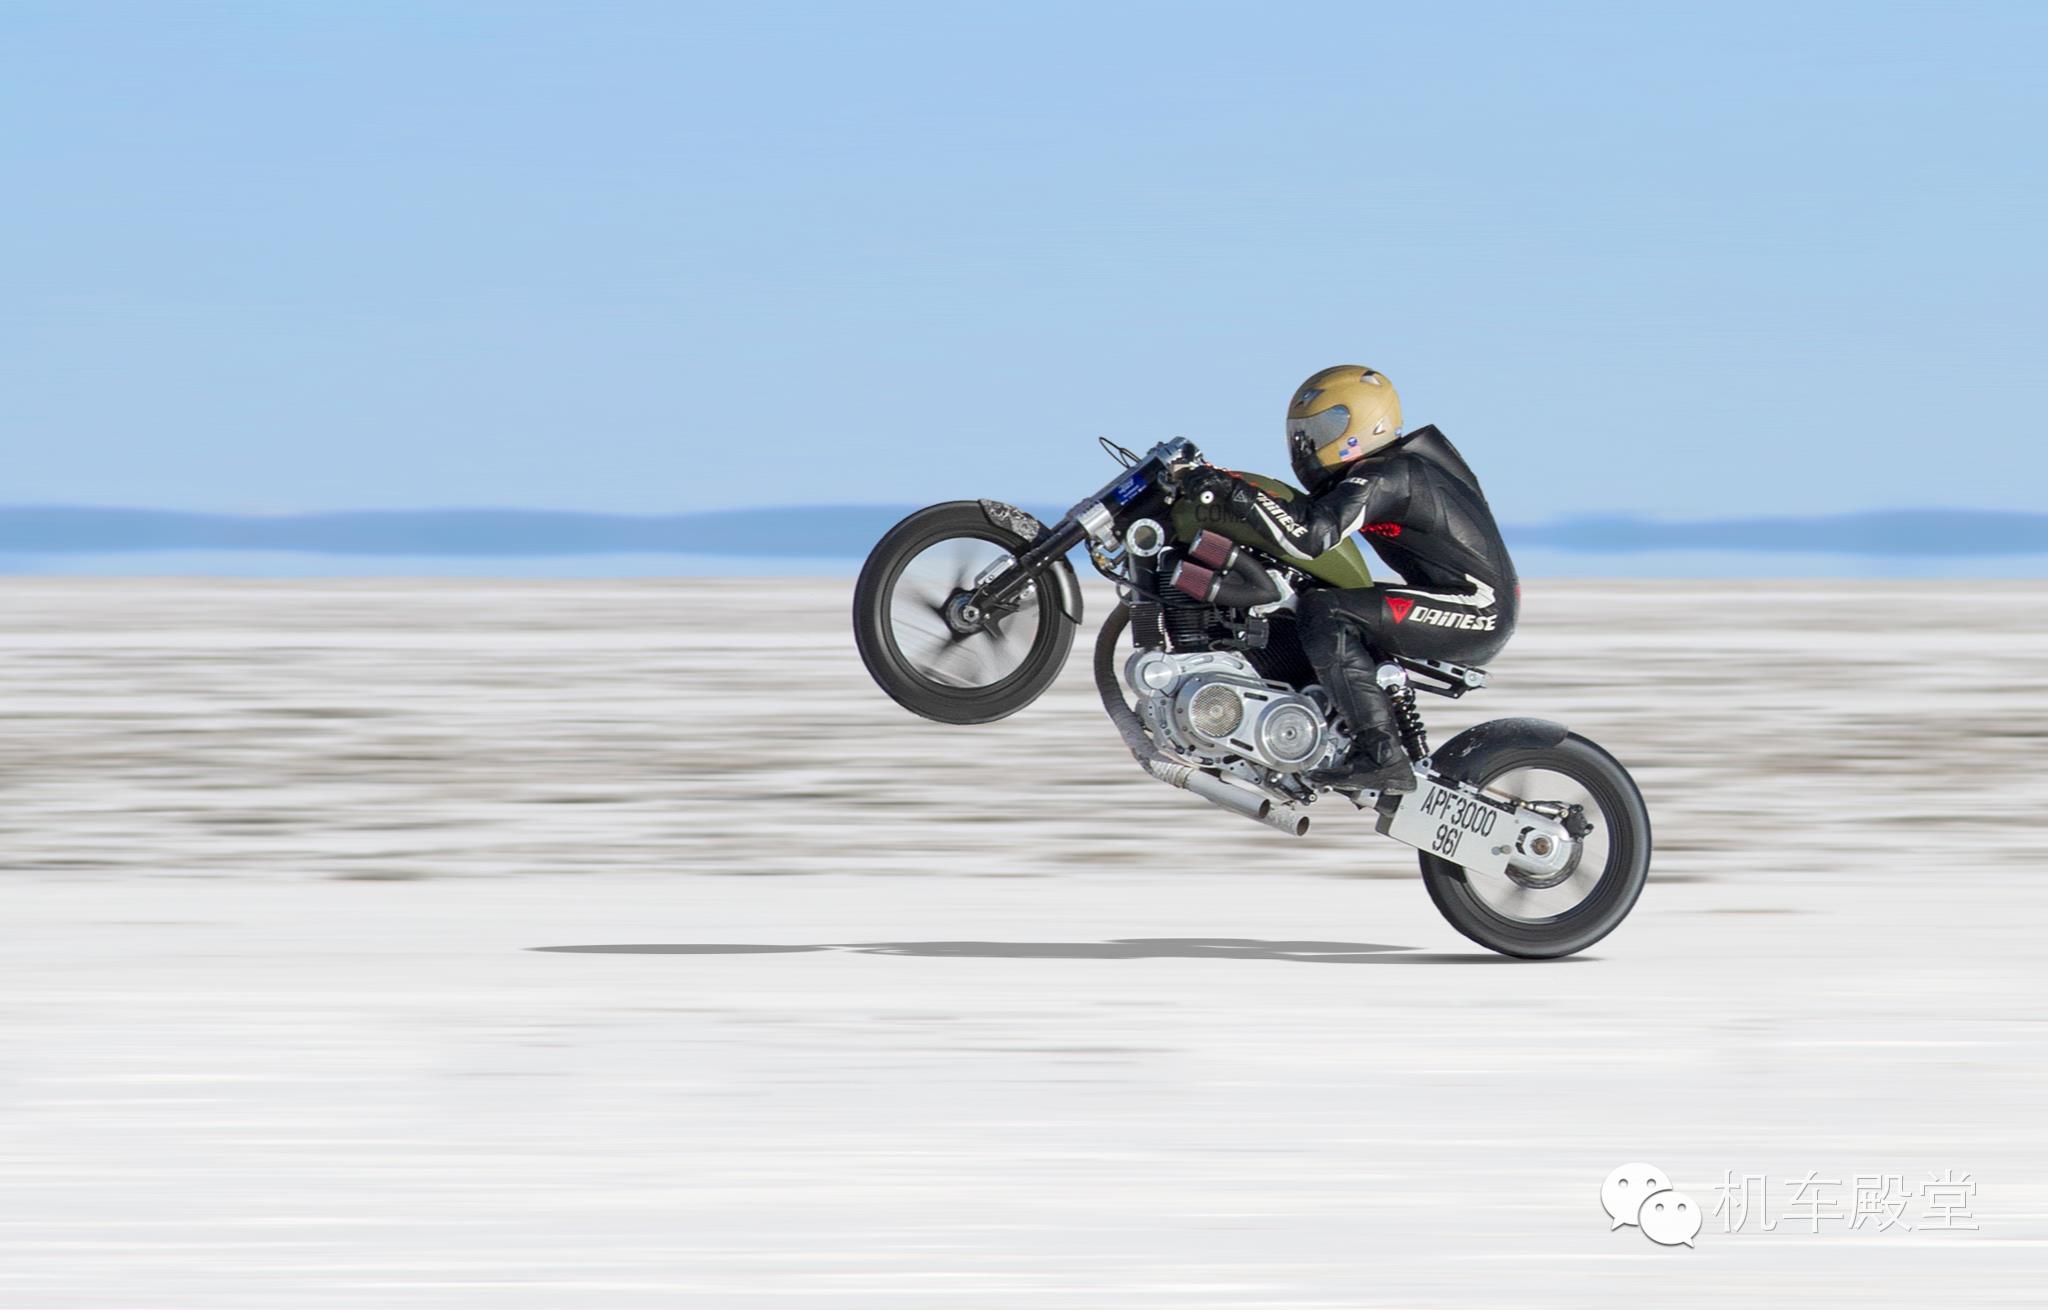 X132 HELLCAT 地狱猫摩托车，是土豪识货者心目中的梦幻车款